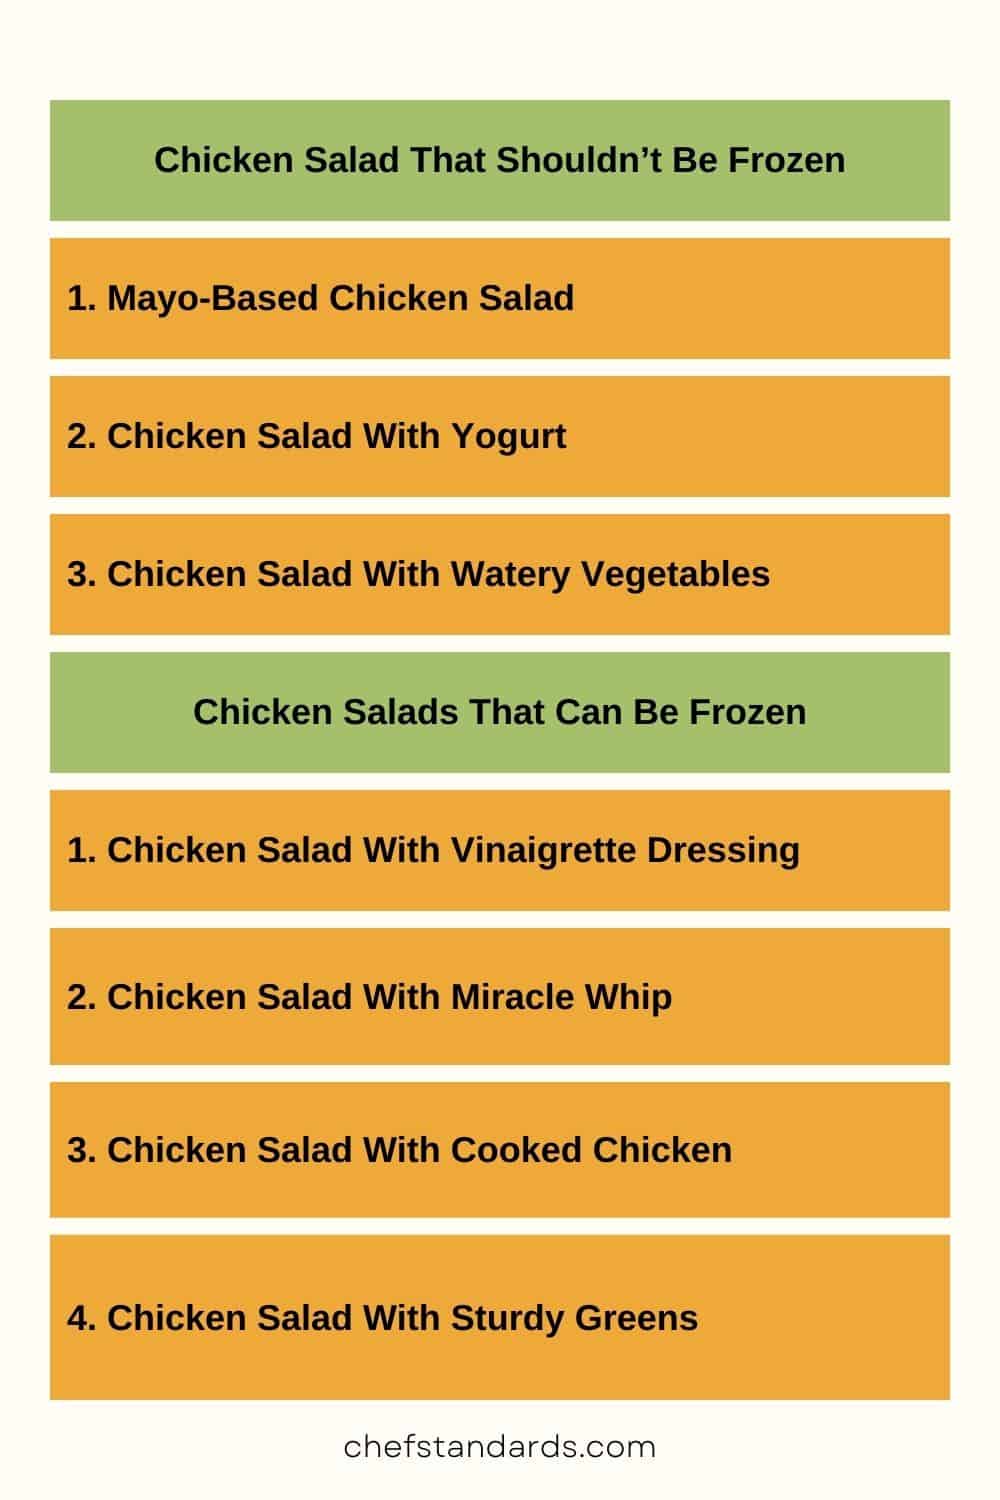 Chicken Salad That Shouldn’t Be Frozen